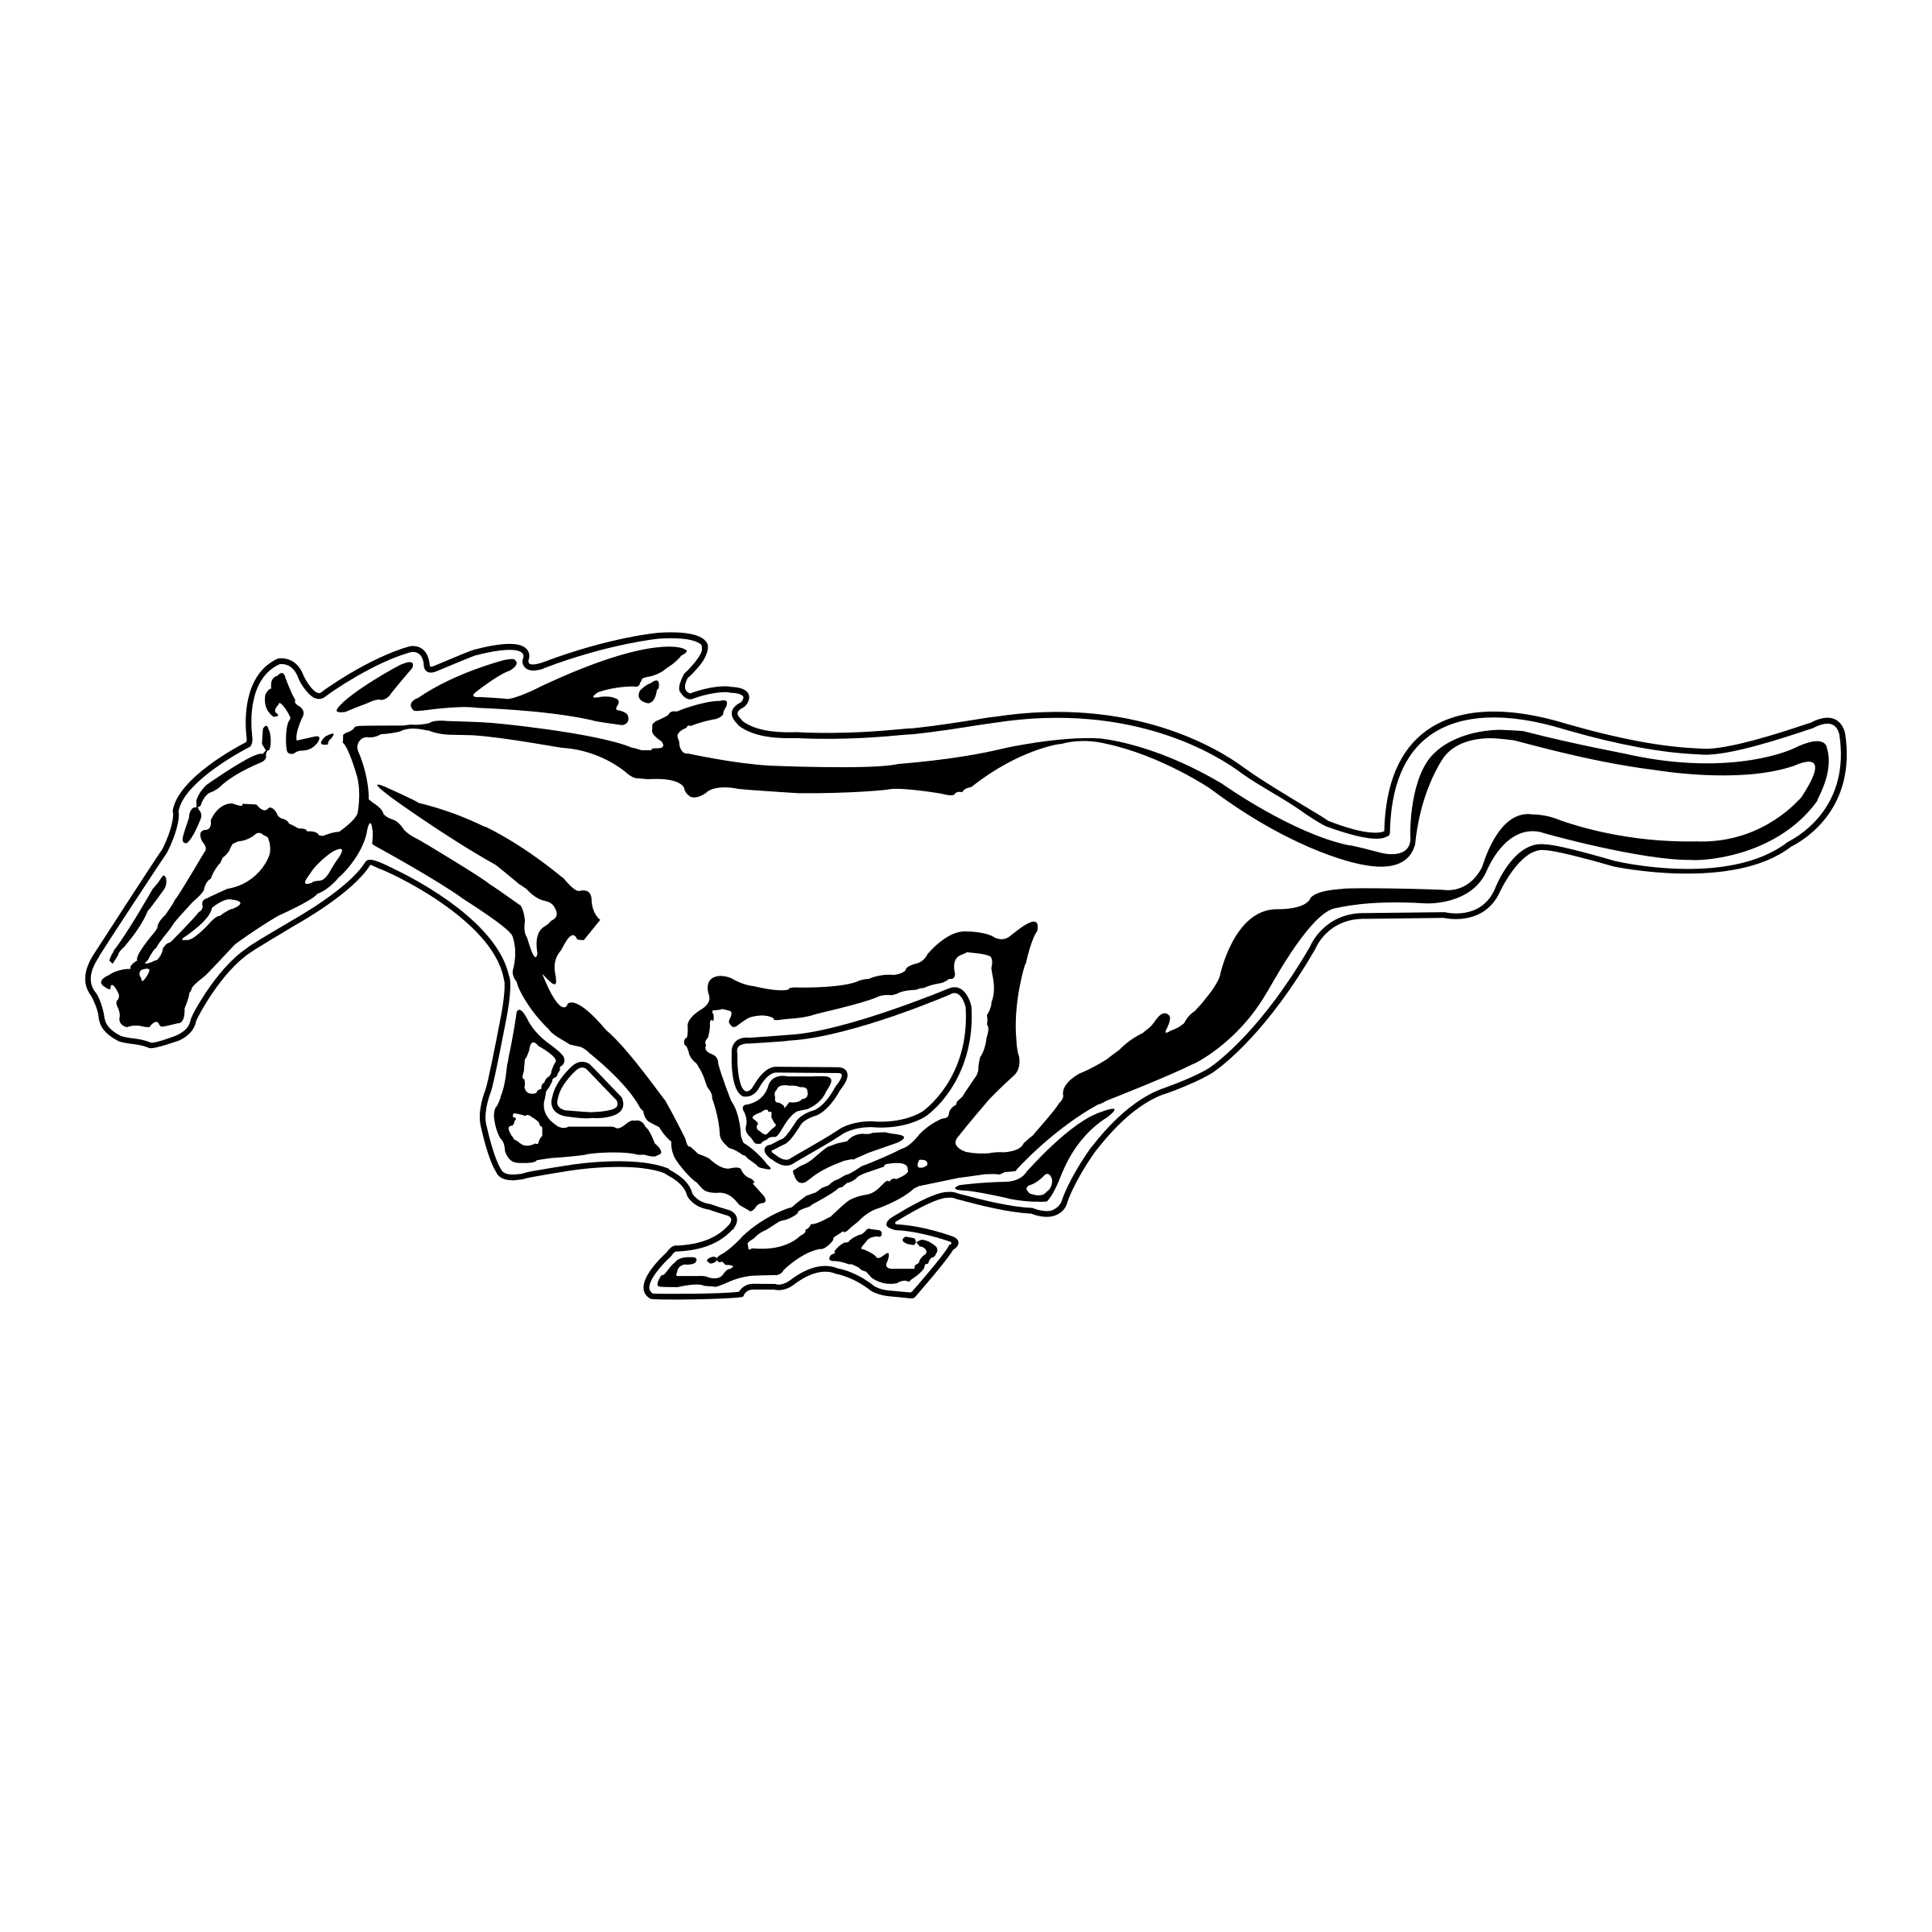 Mustang Logo - Mustang Logo PNG Transparent & SVG Vector - Freebie Supply